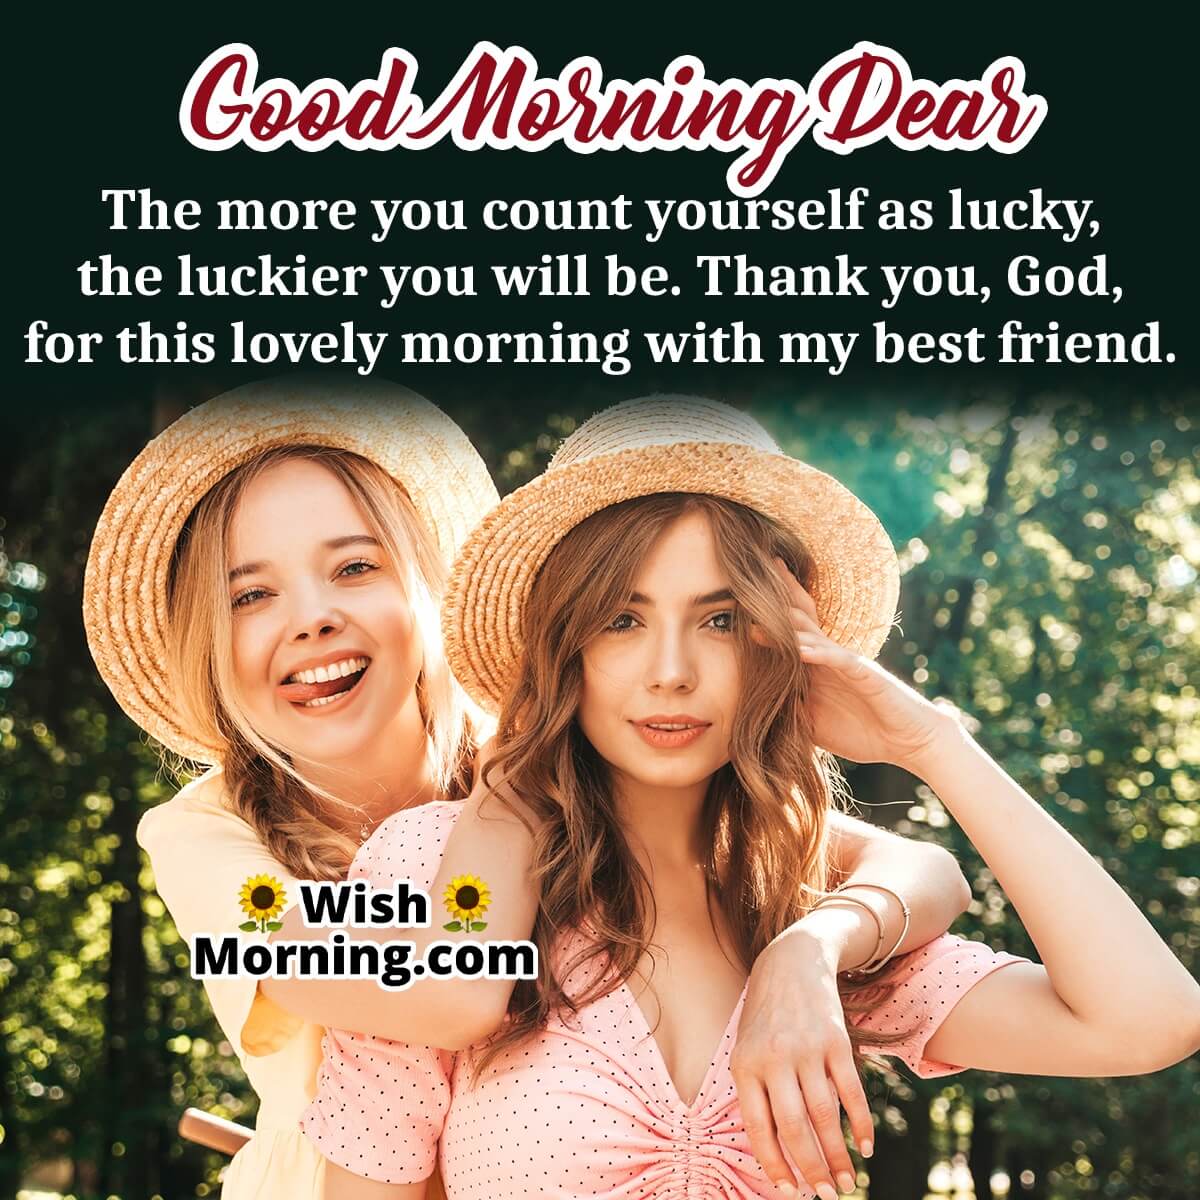 Good Morning Dear Friend